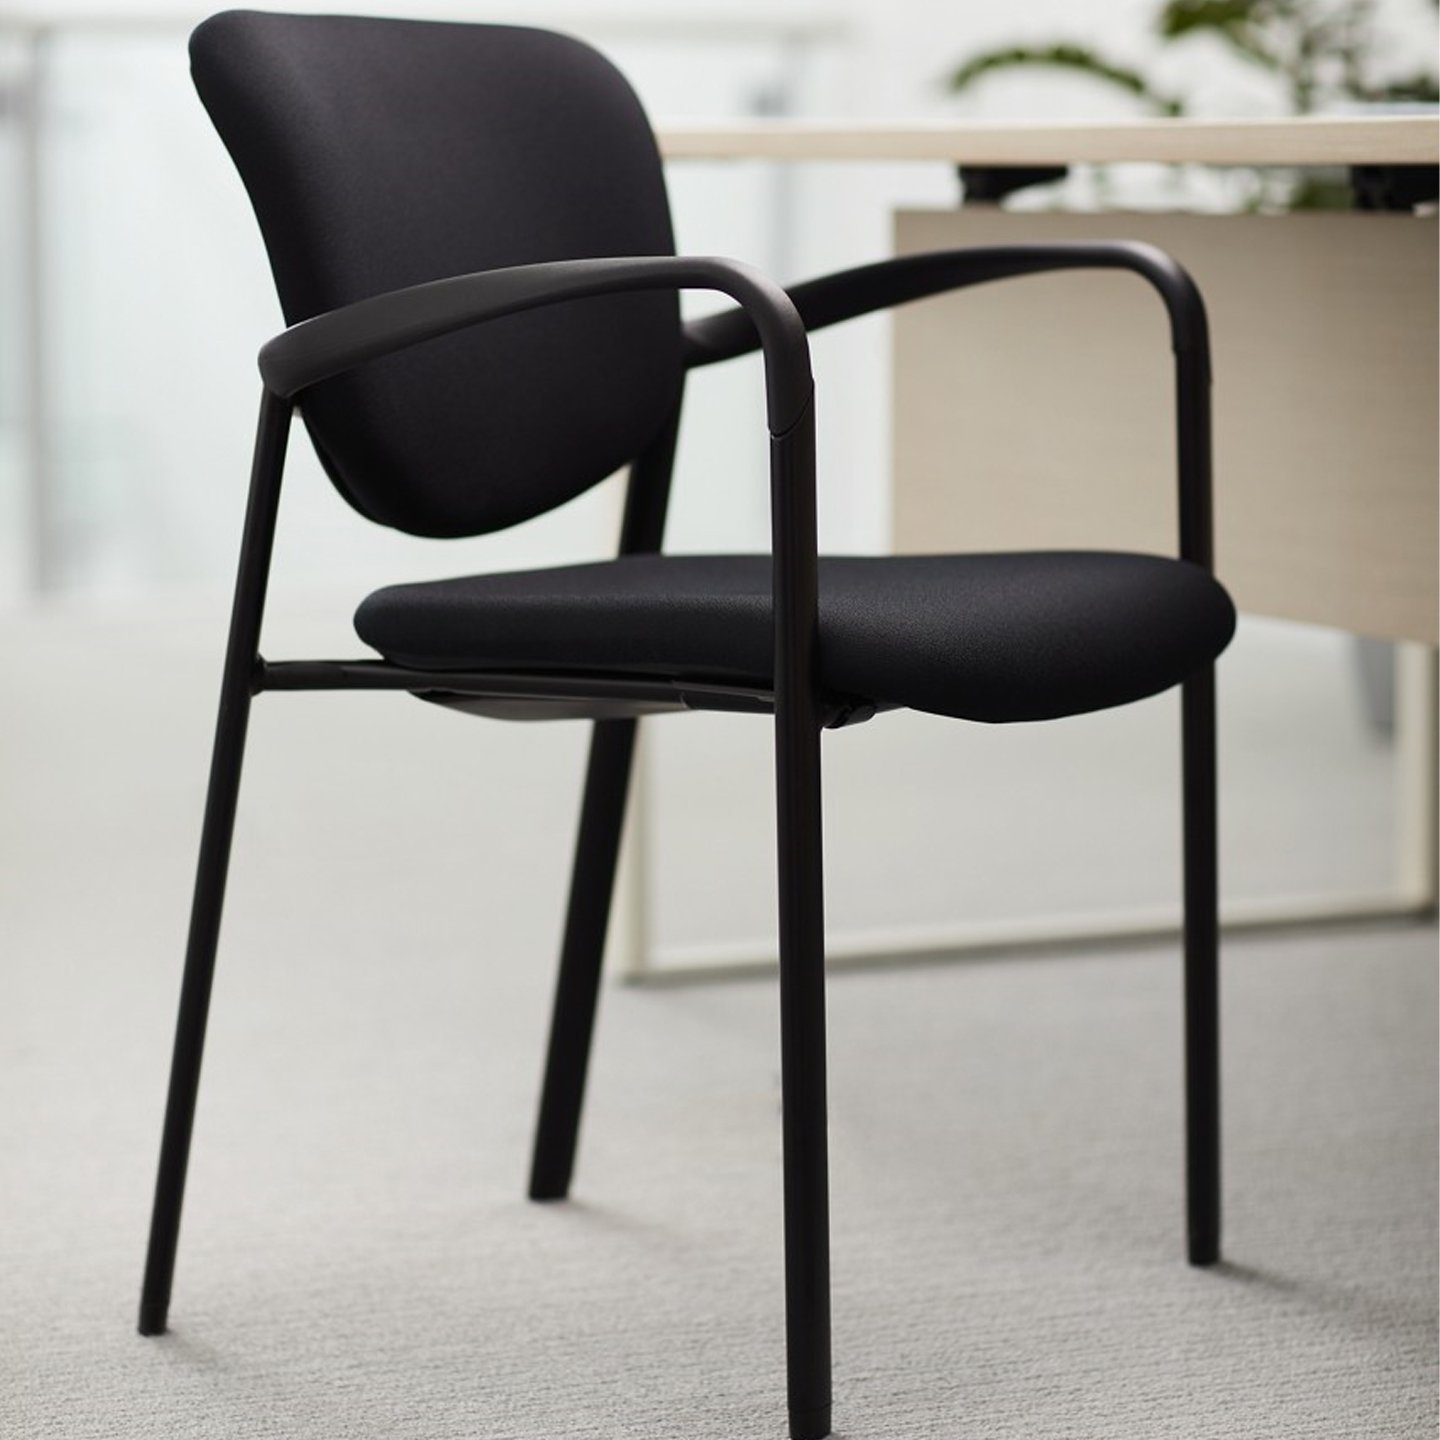 Haworth Improv Side chair in black upholstery